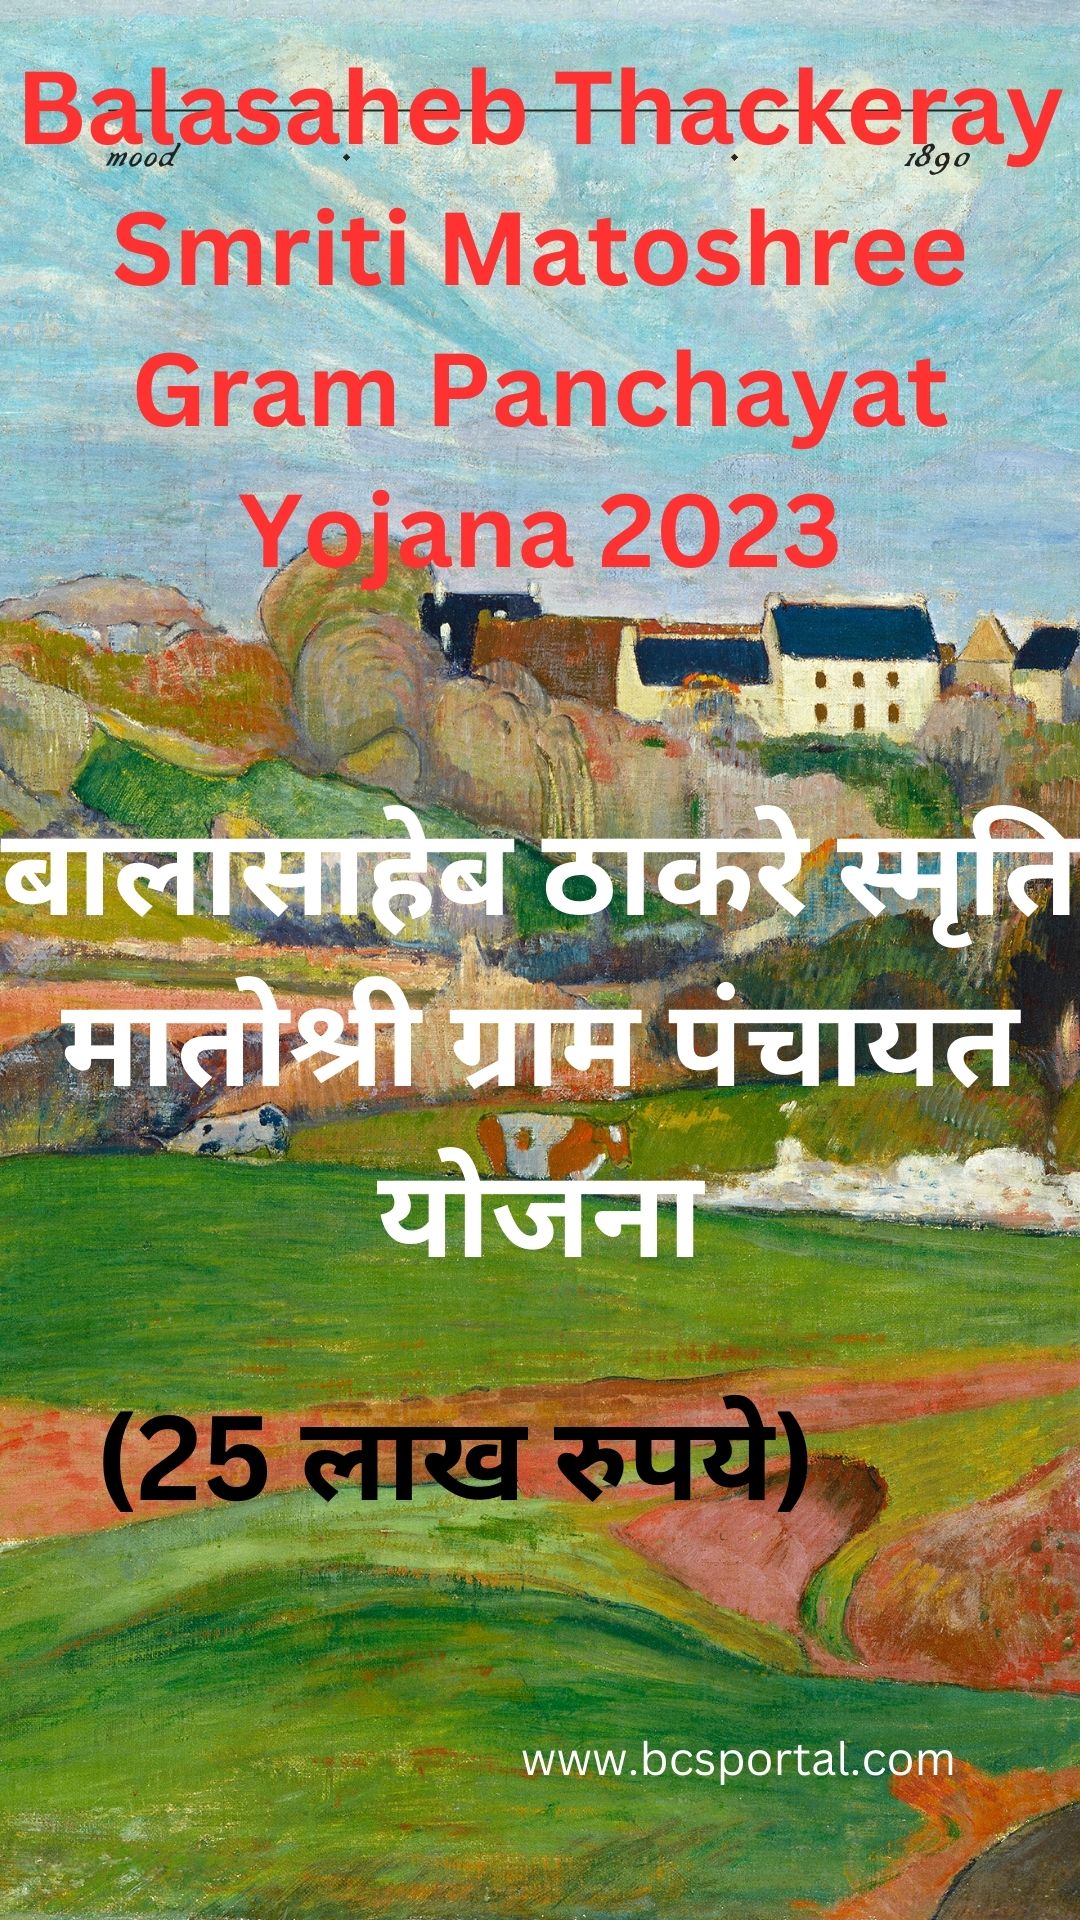 Balasaheb Thackeray Smriti Matoshree Gram Panchayat Yojana 2023